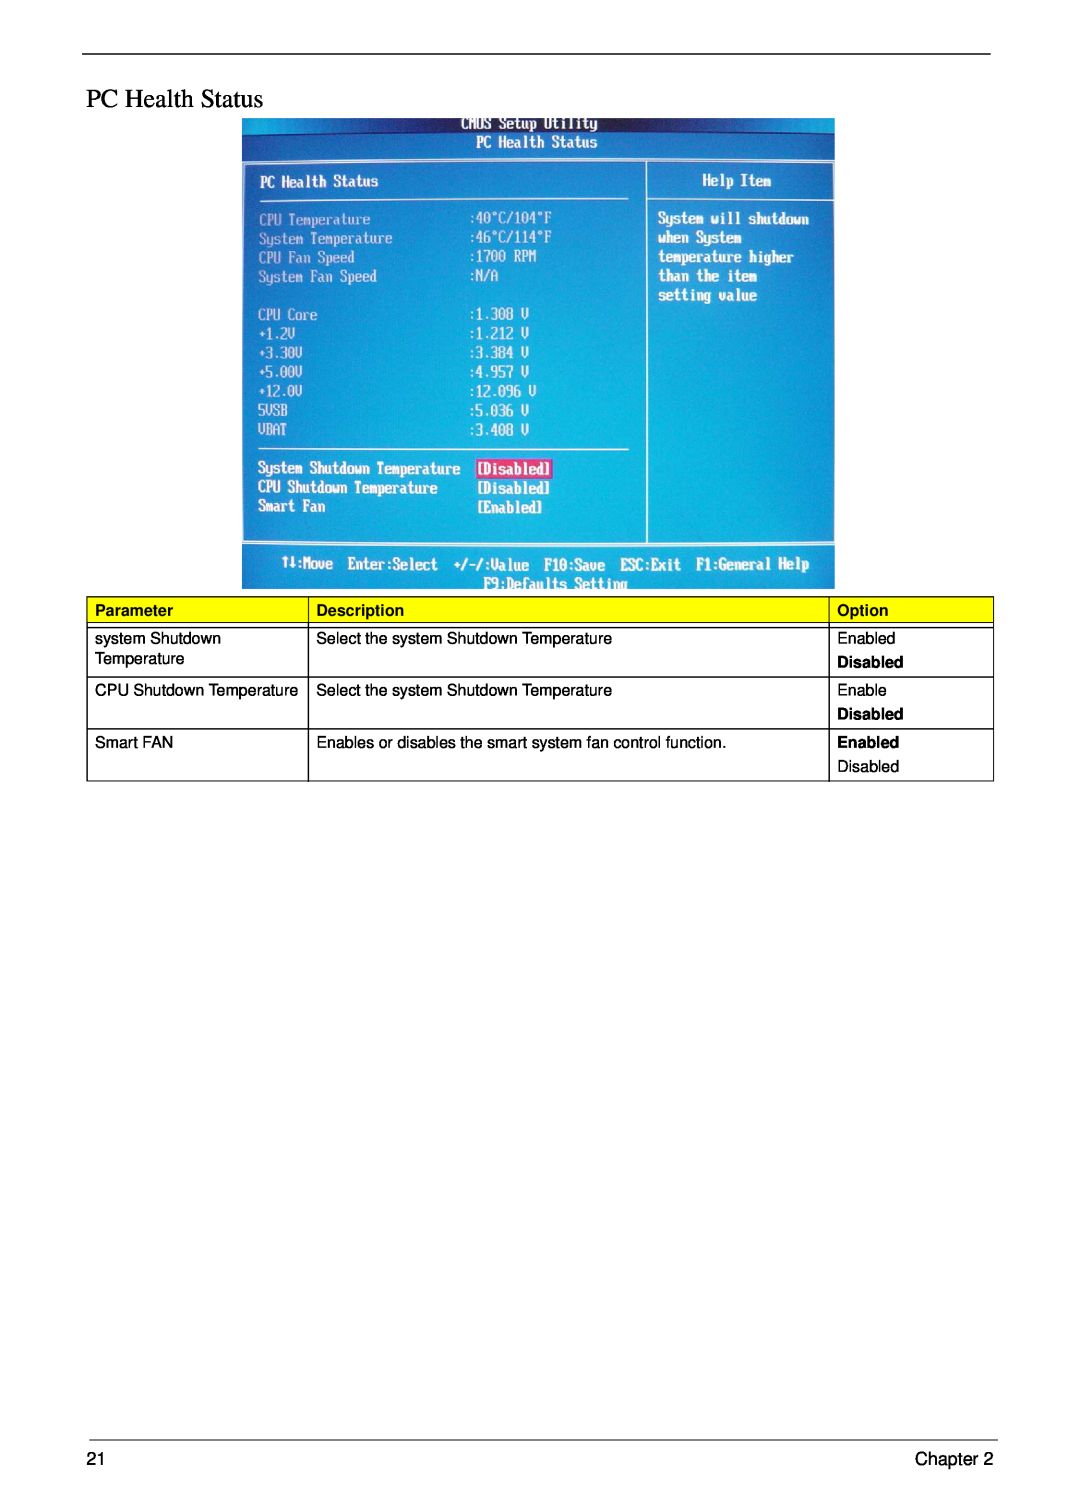 Acer m3400(g) manual PC Health Status, Parameter, Description, Option, Disabled, Enabled 